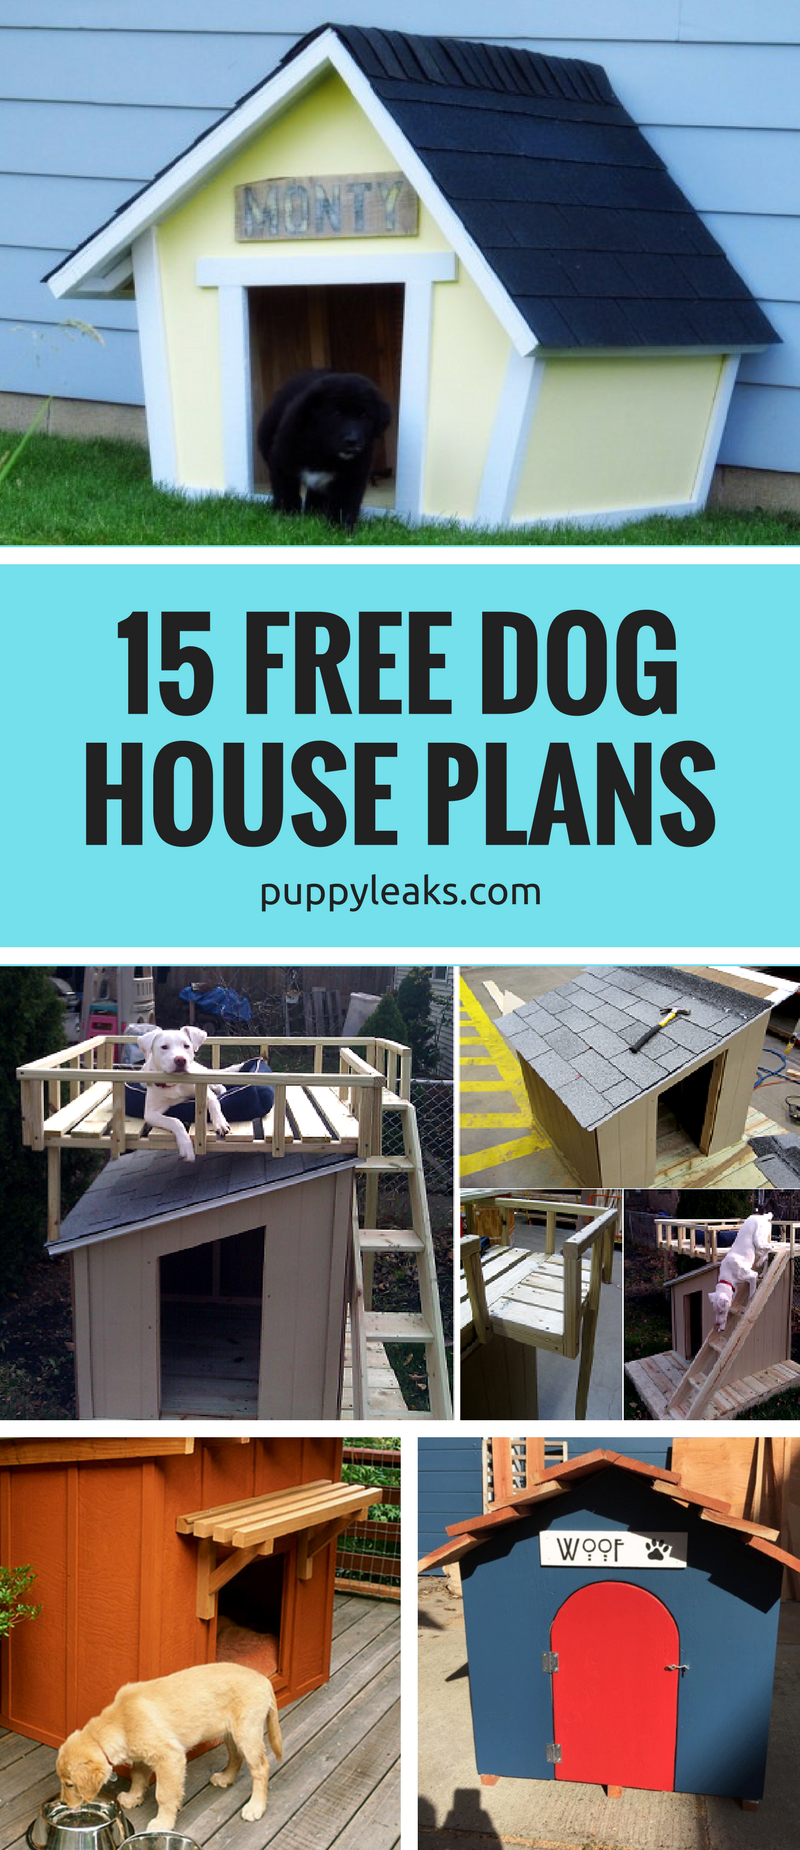 15 Free Dog House Plans